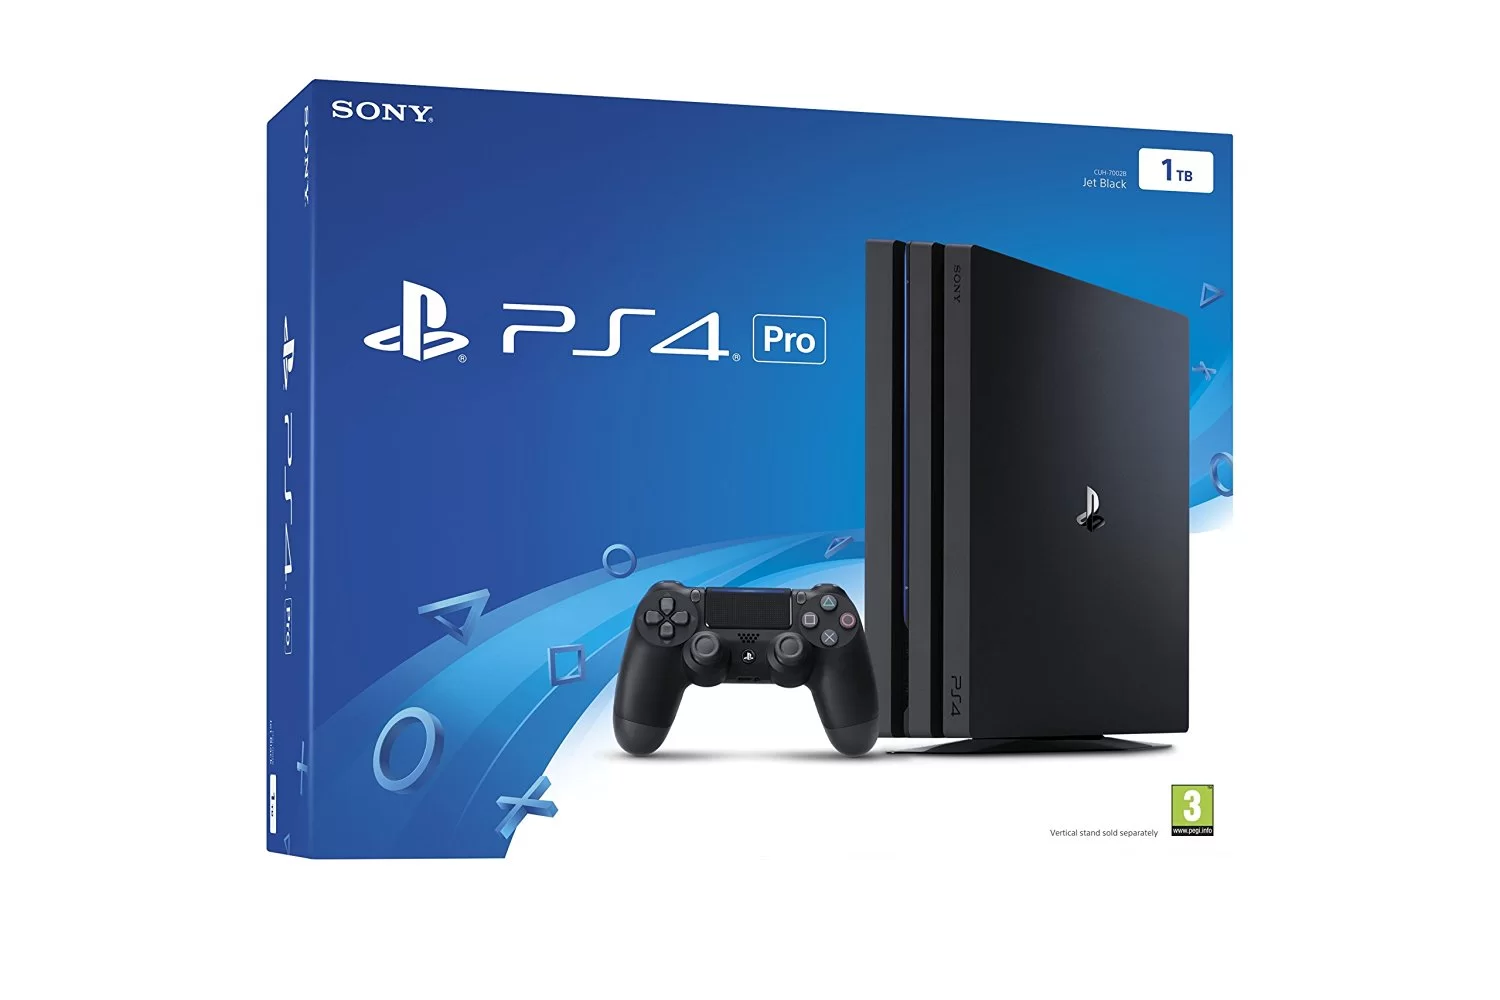 Sony PlayStation 4 Pro 1TB ( PS4 Pro ) - CUH-7216B - Latest 